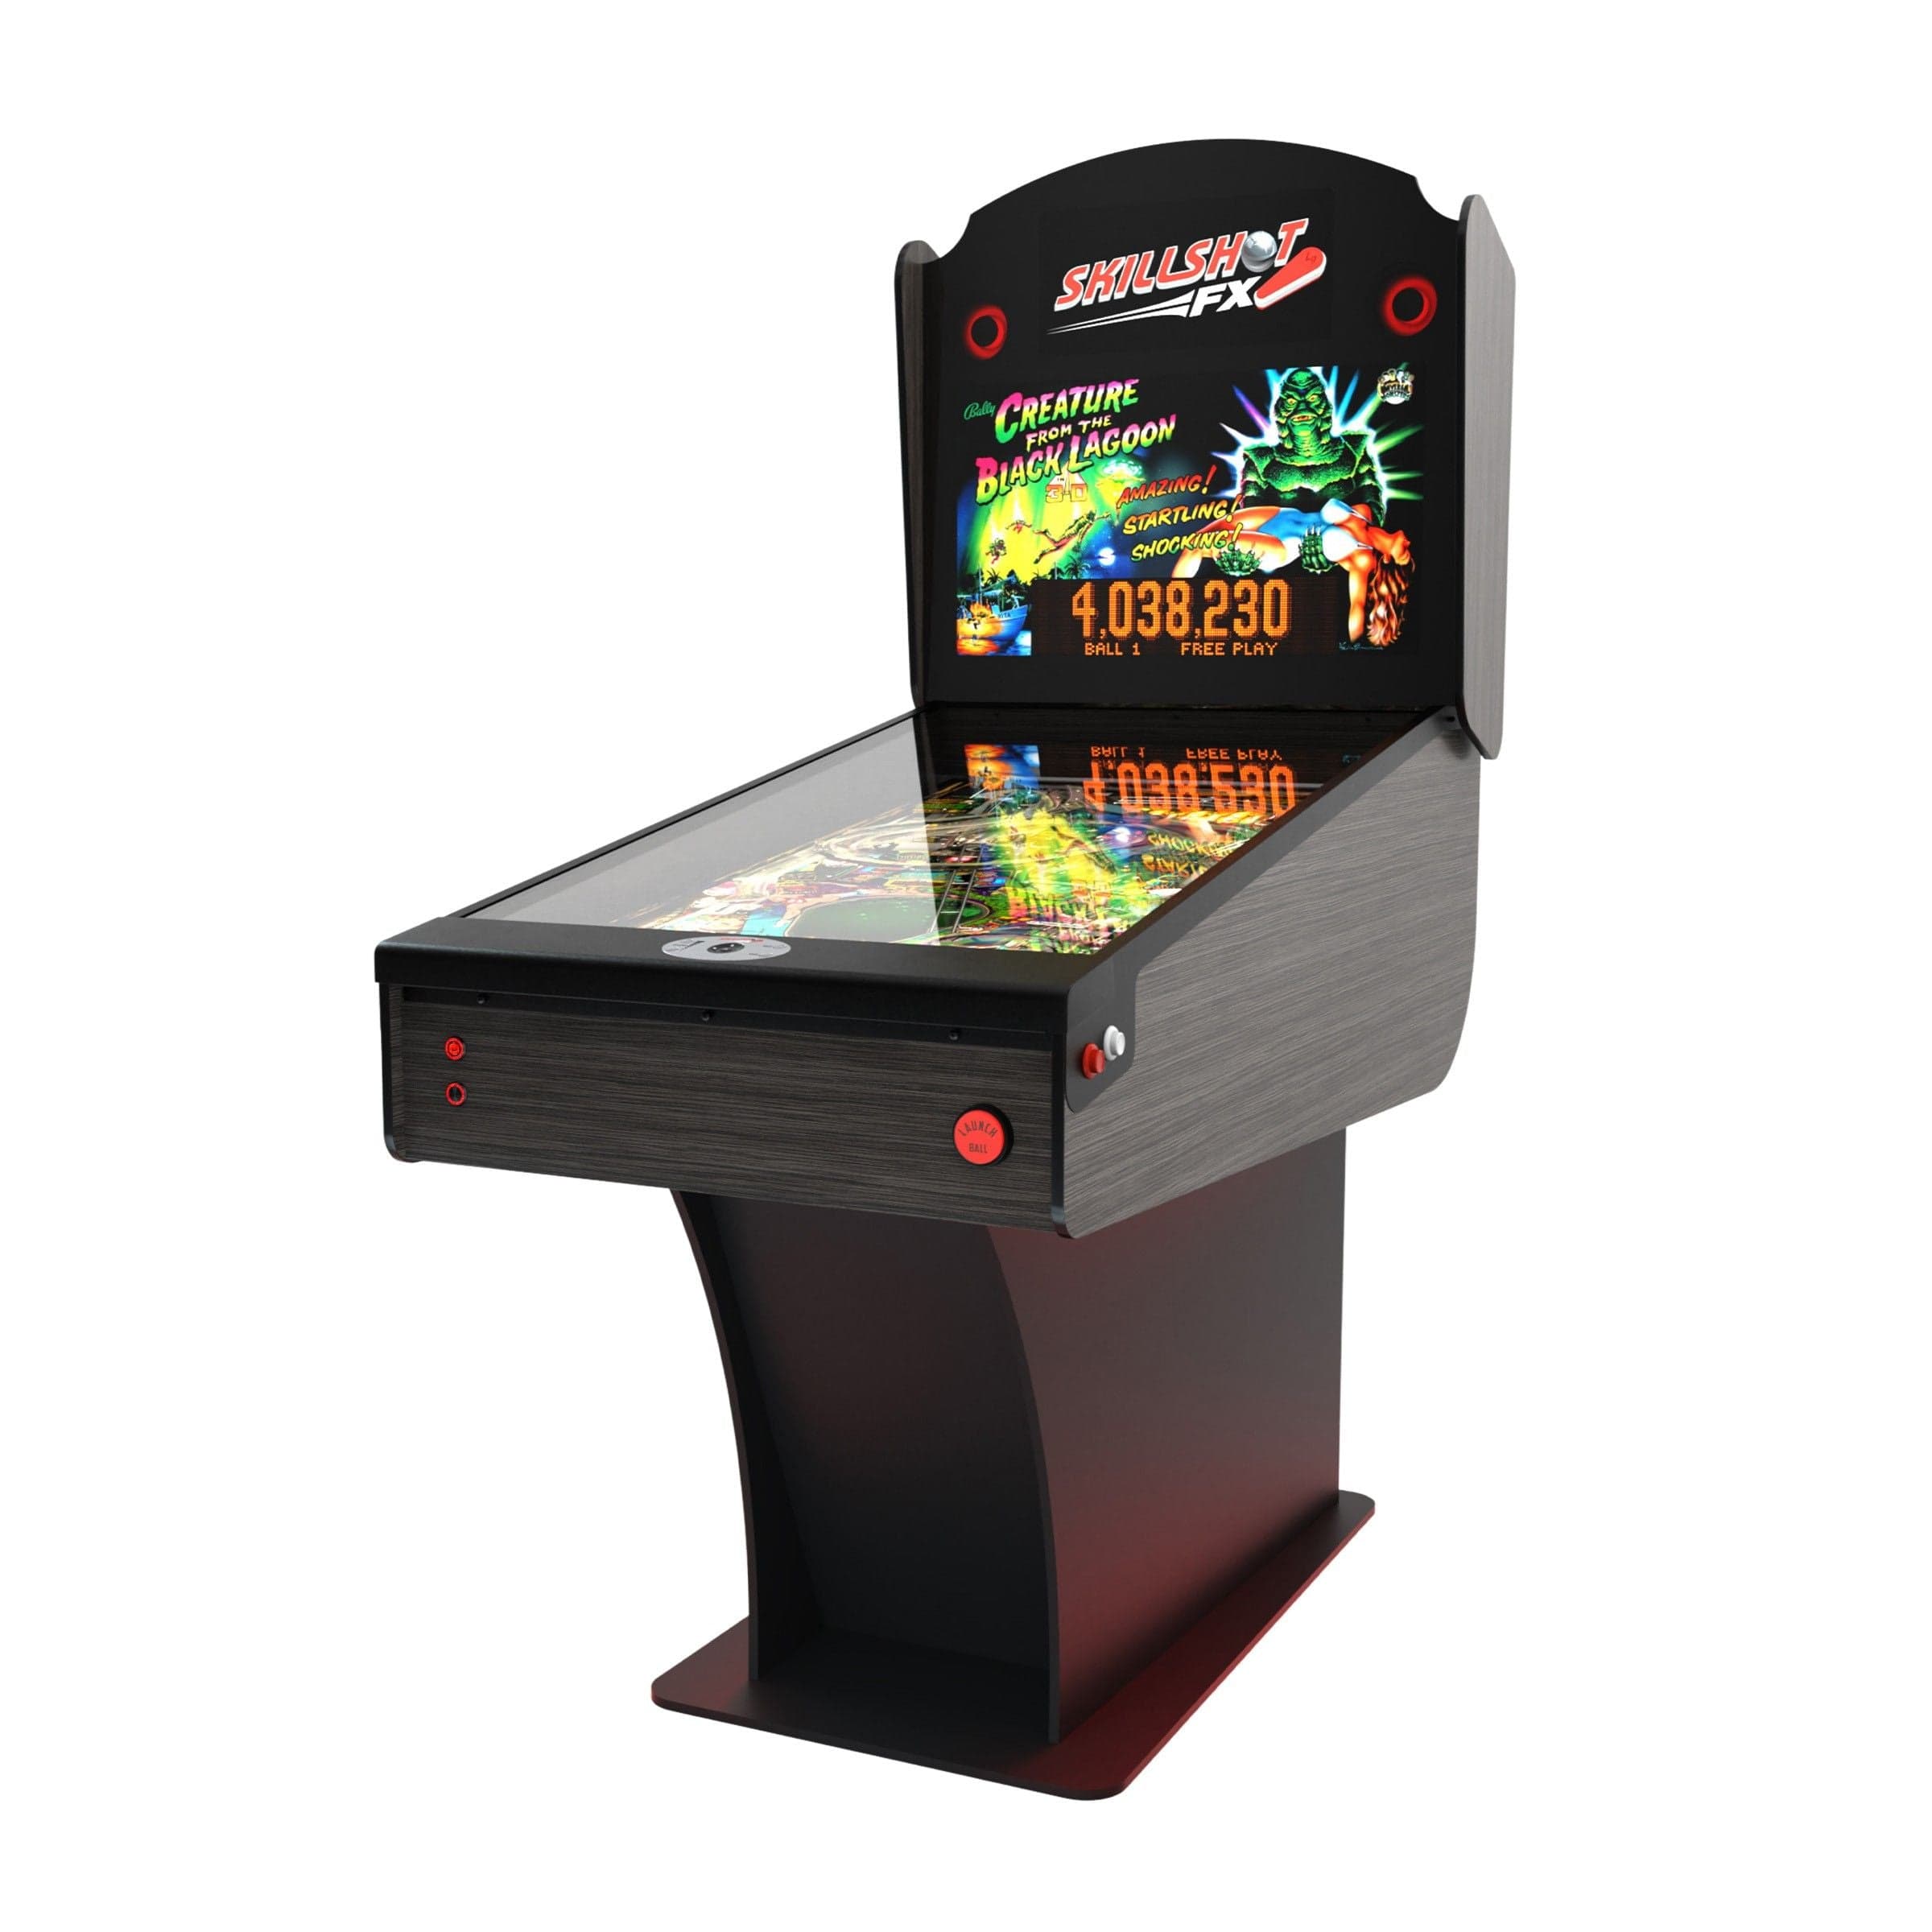 Imperial Arcade Imperial - SkillShot 96 pinball games - FX 55" LED Display - 26-6125  